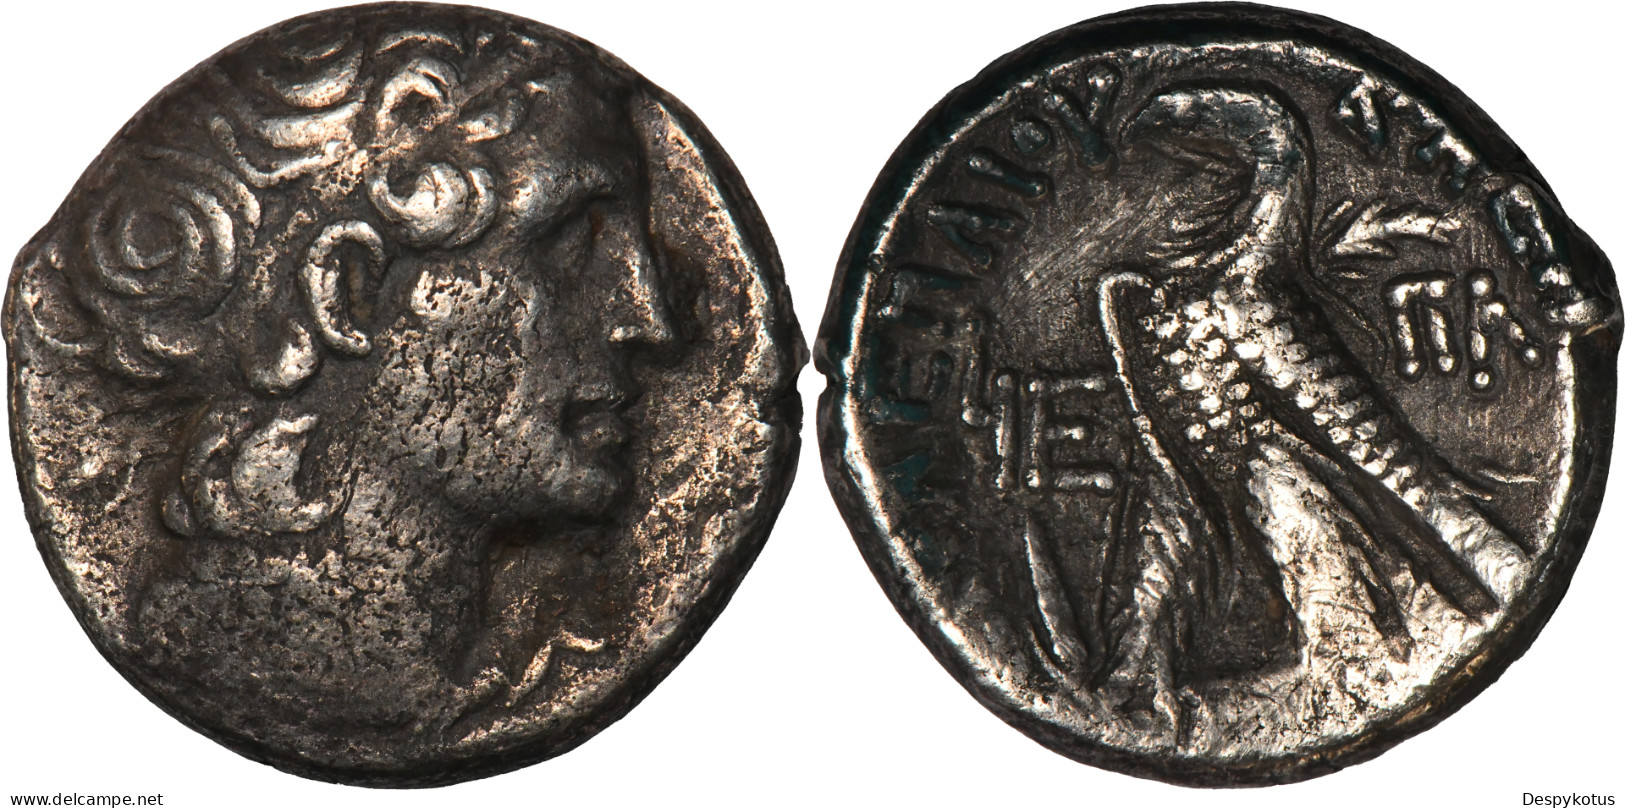 GRECE ANTIQUE - Tetradrachme - EGYPTE, Alexandrie - Cléopatre VII / Ptolémée XV - TRES RARE - 19-270 - Griekenland